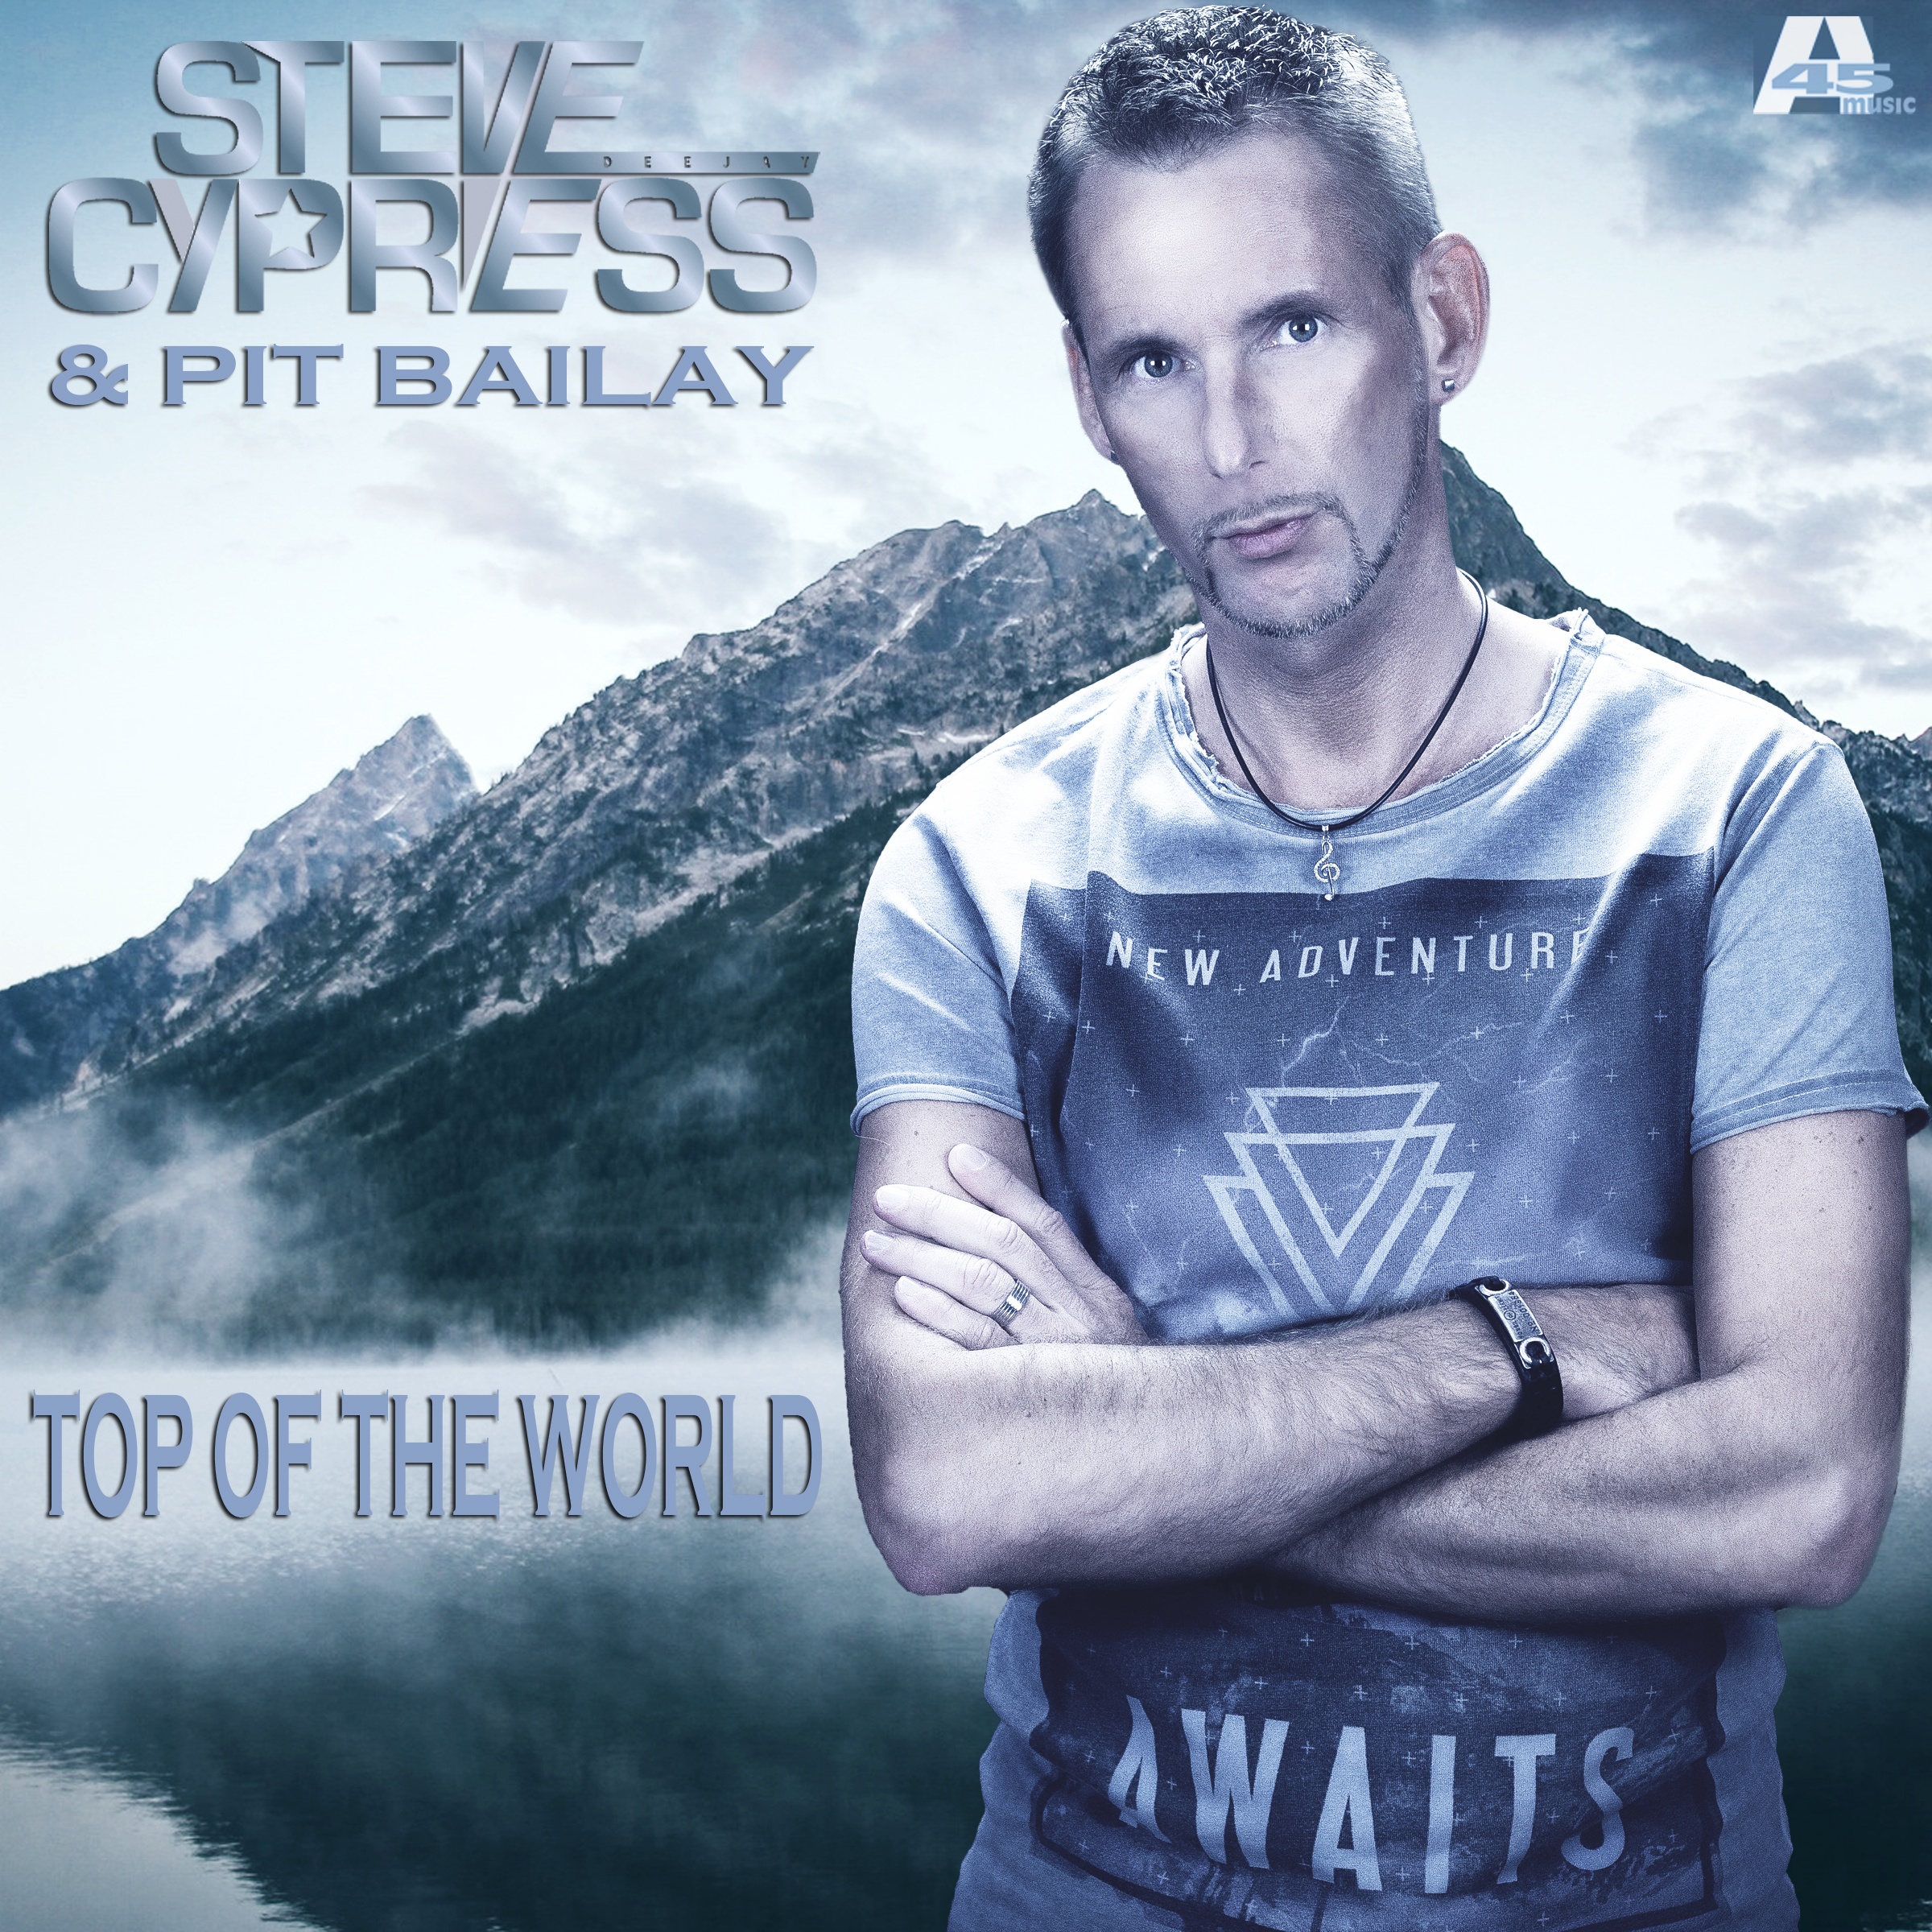 Top Of The World (Original Mix)